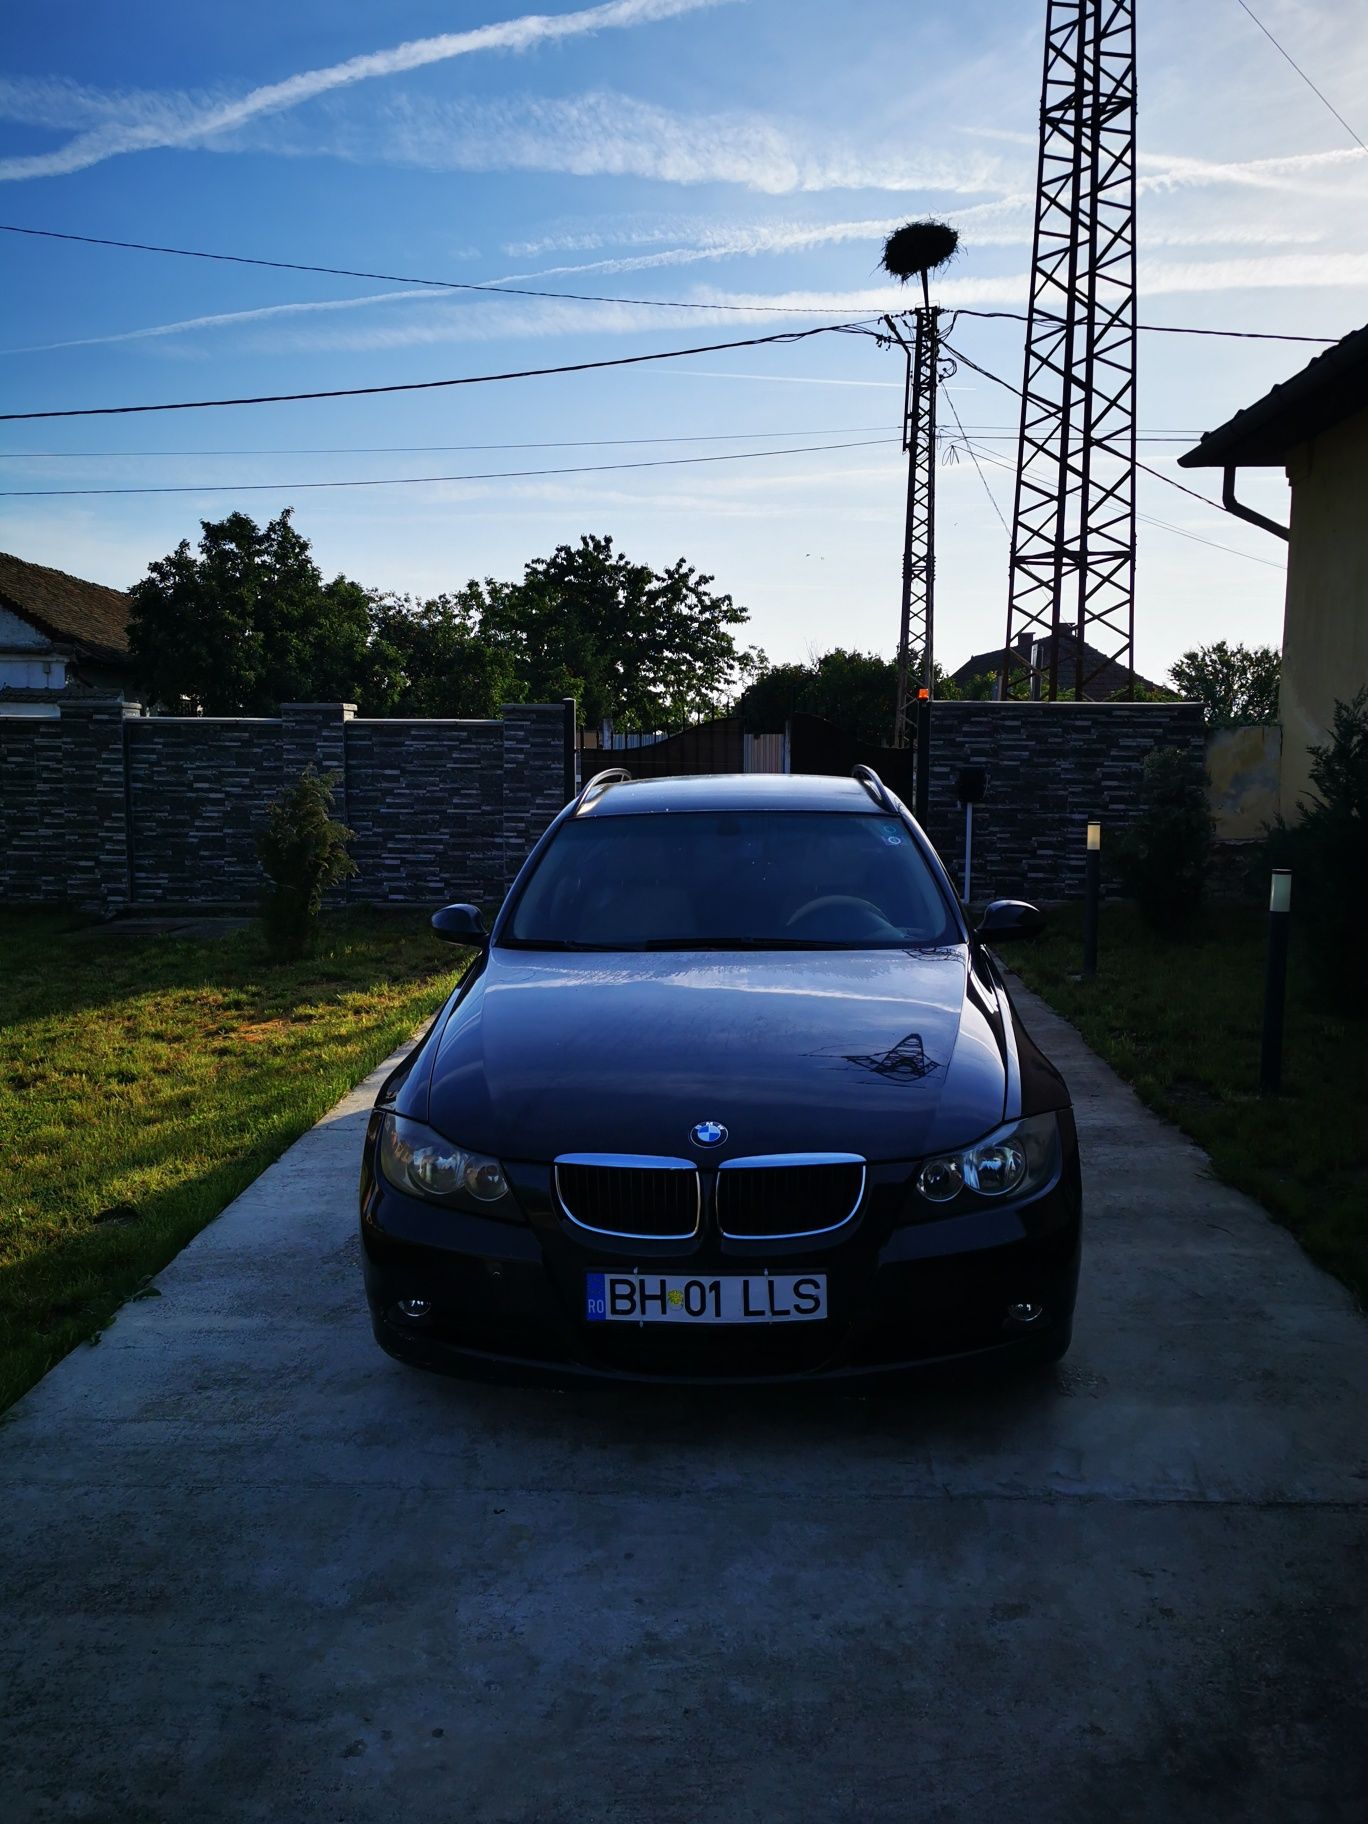 Vând BMW e91. 163CP